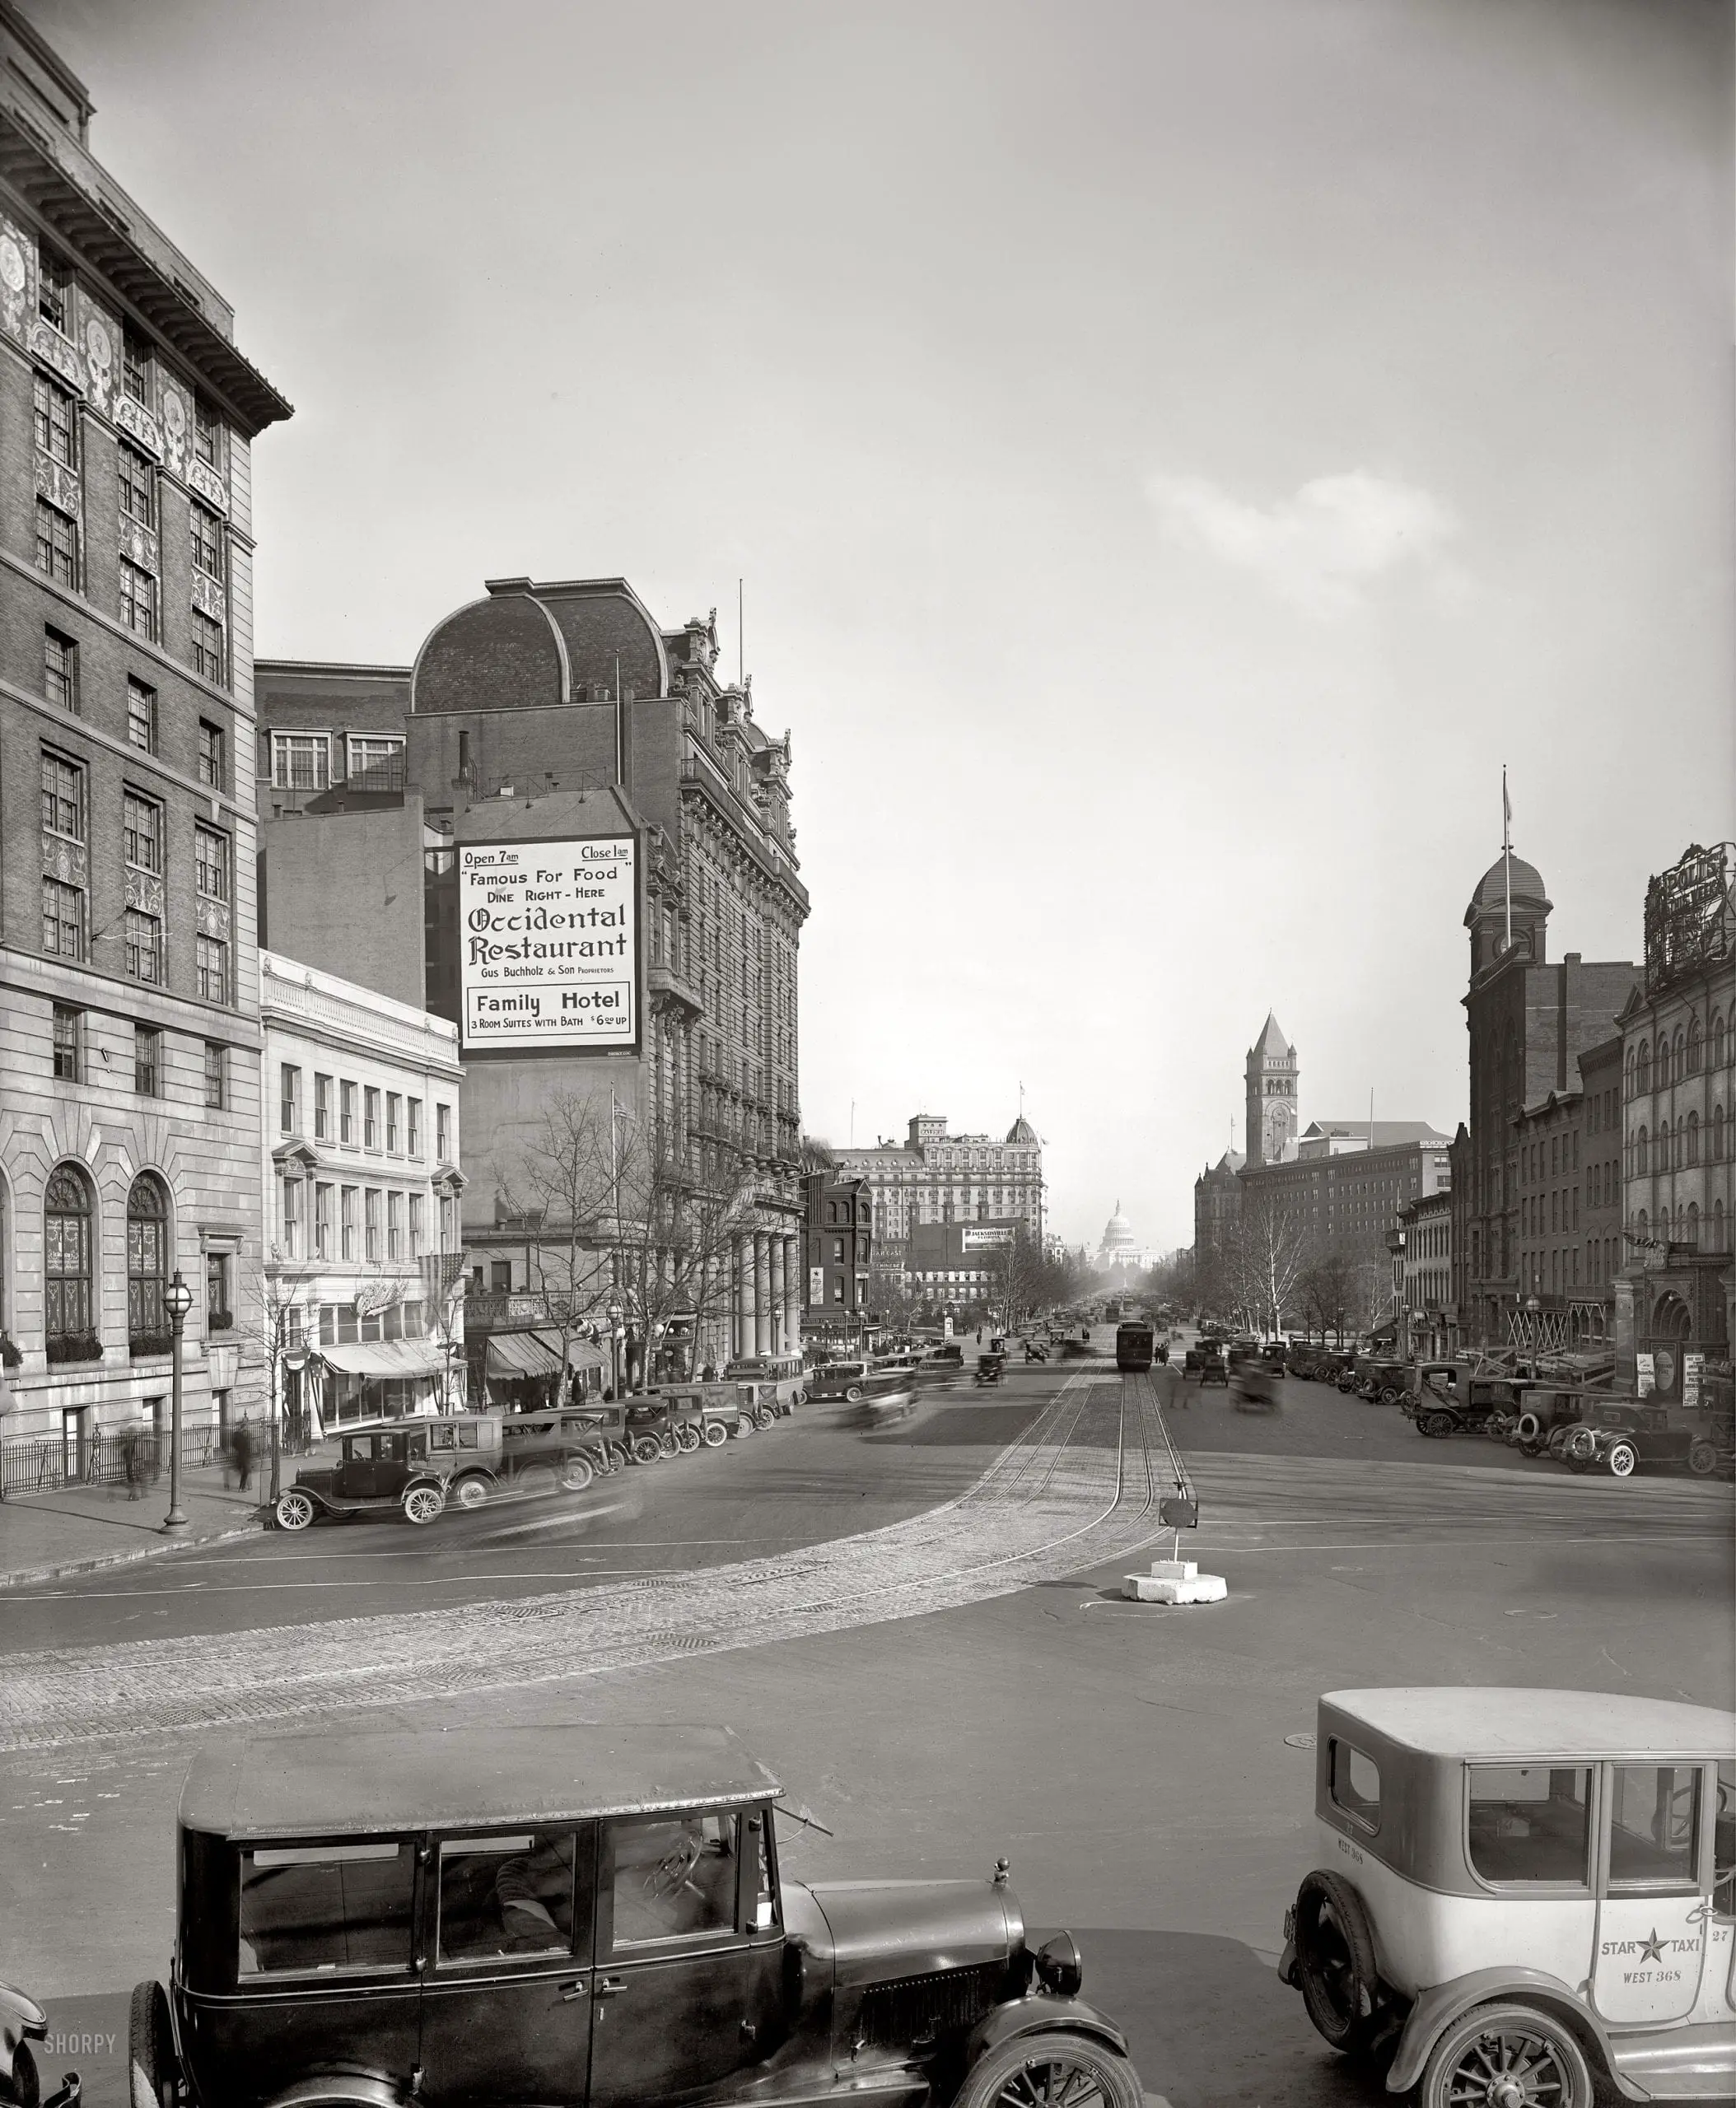 March 1925. Washington, D.C. "Pennsylvania Avenue." Lots of Shorpy landmarks here. Harris & Ewing Collection glass negative.